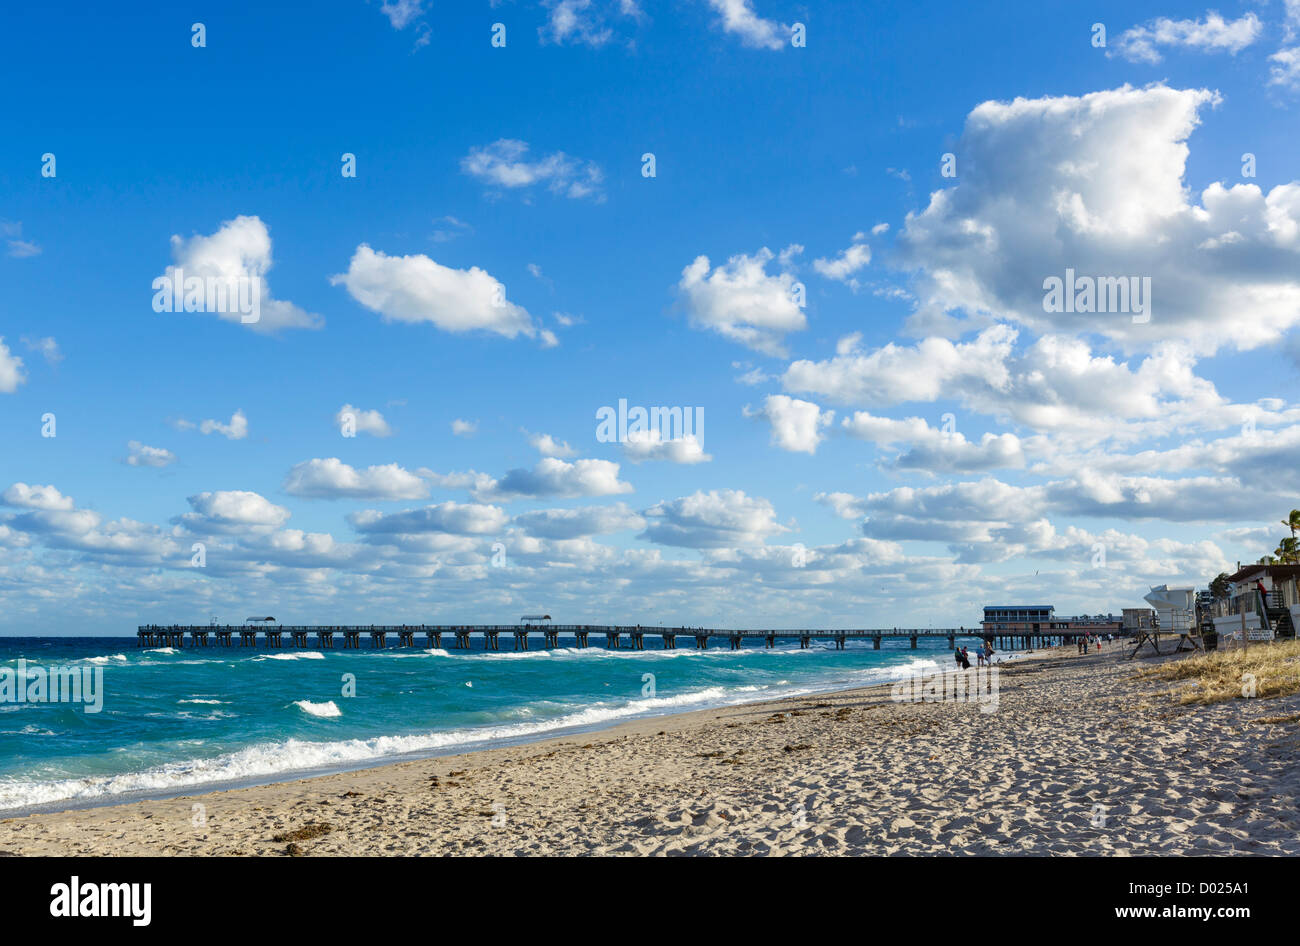 The beach and pier at Lake Worth, Palm Beach County, Treasure Coast, Florida, USA Stock Photo